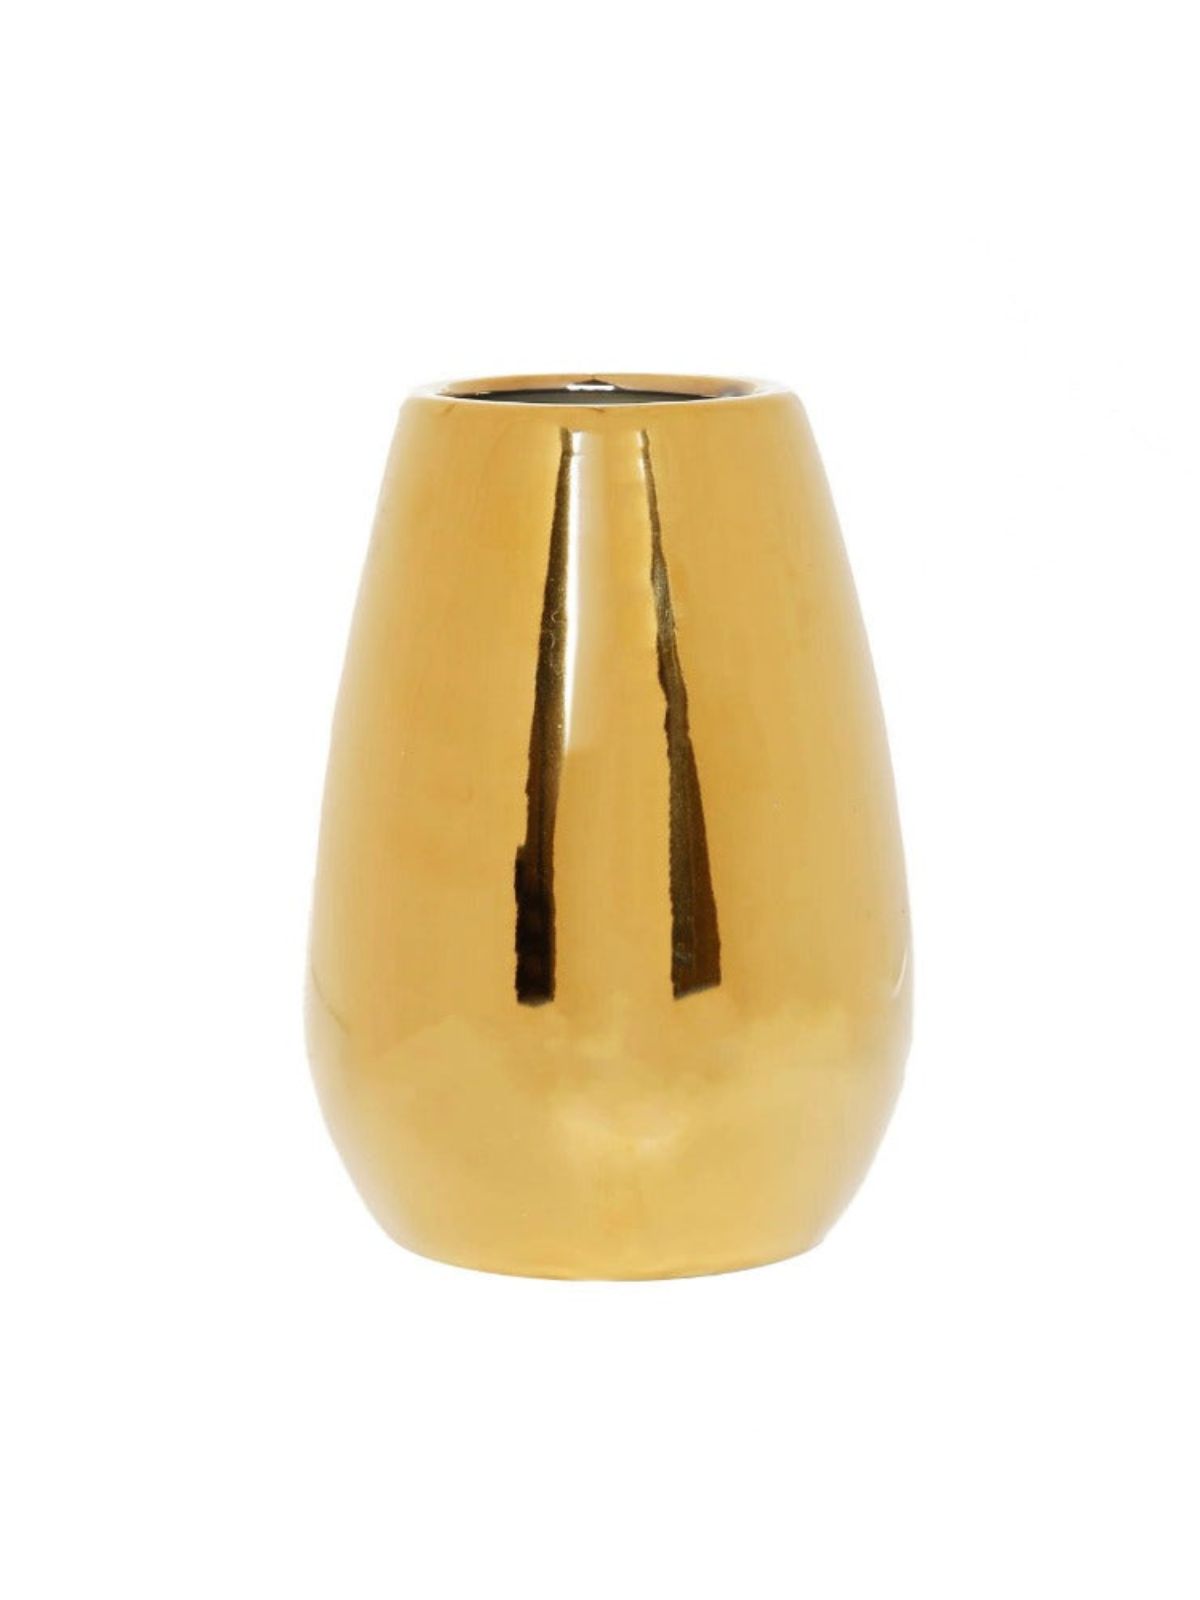 7H Gold Metallic Ceramic Bud Decorative Vase - KYA Home Decor 